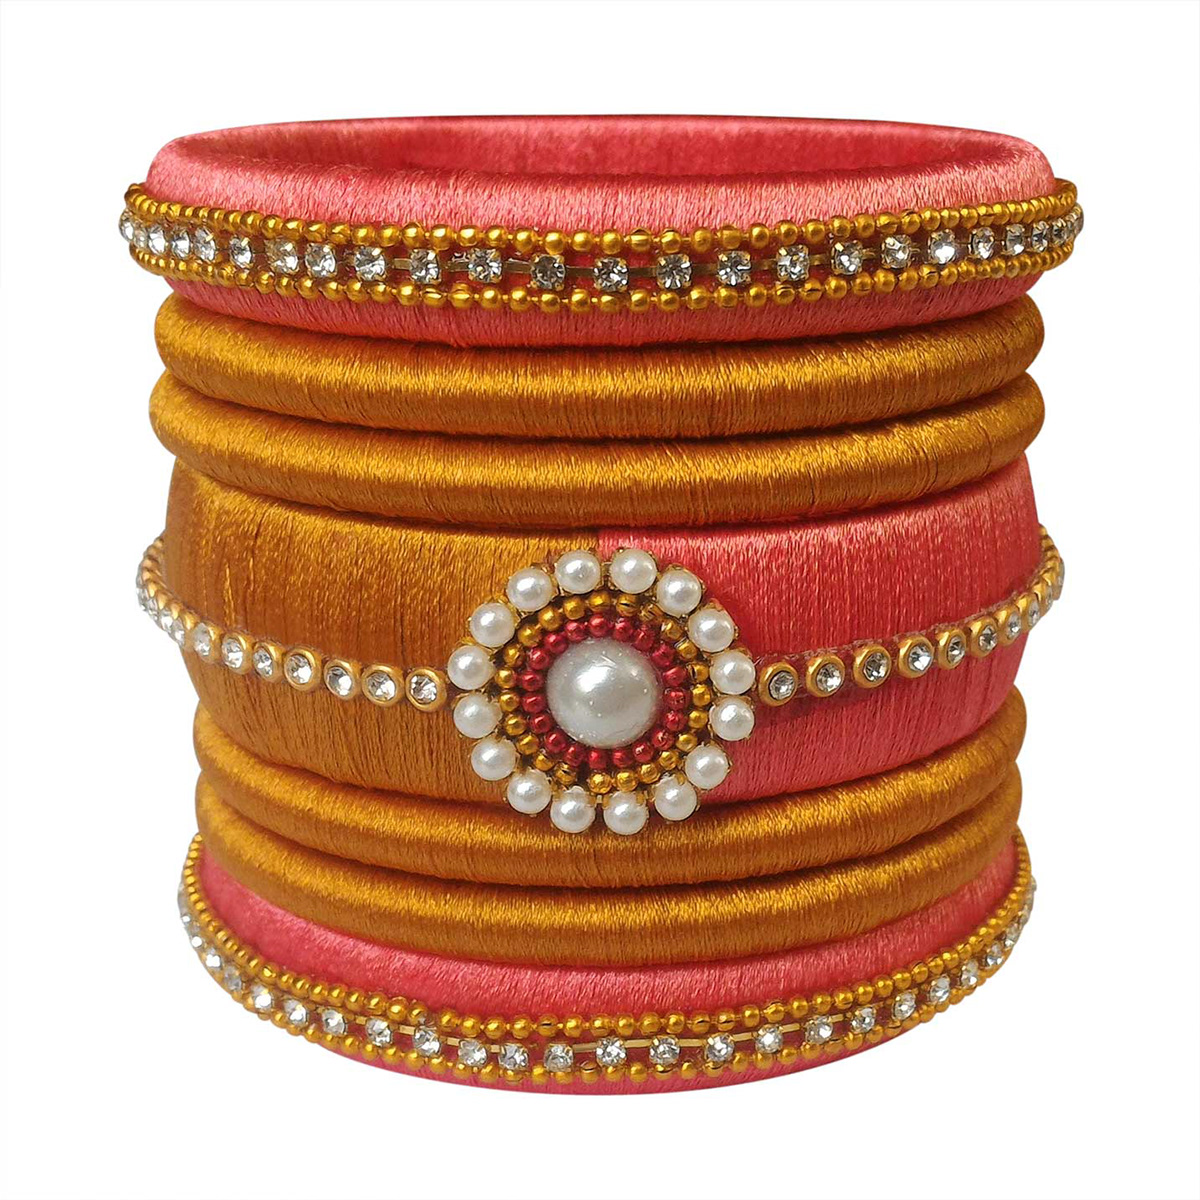 India craft bangle thread SILK handicrafts